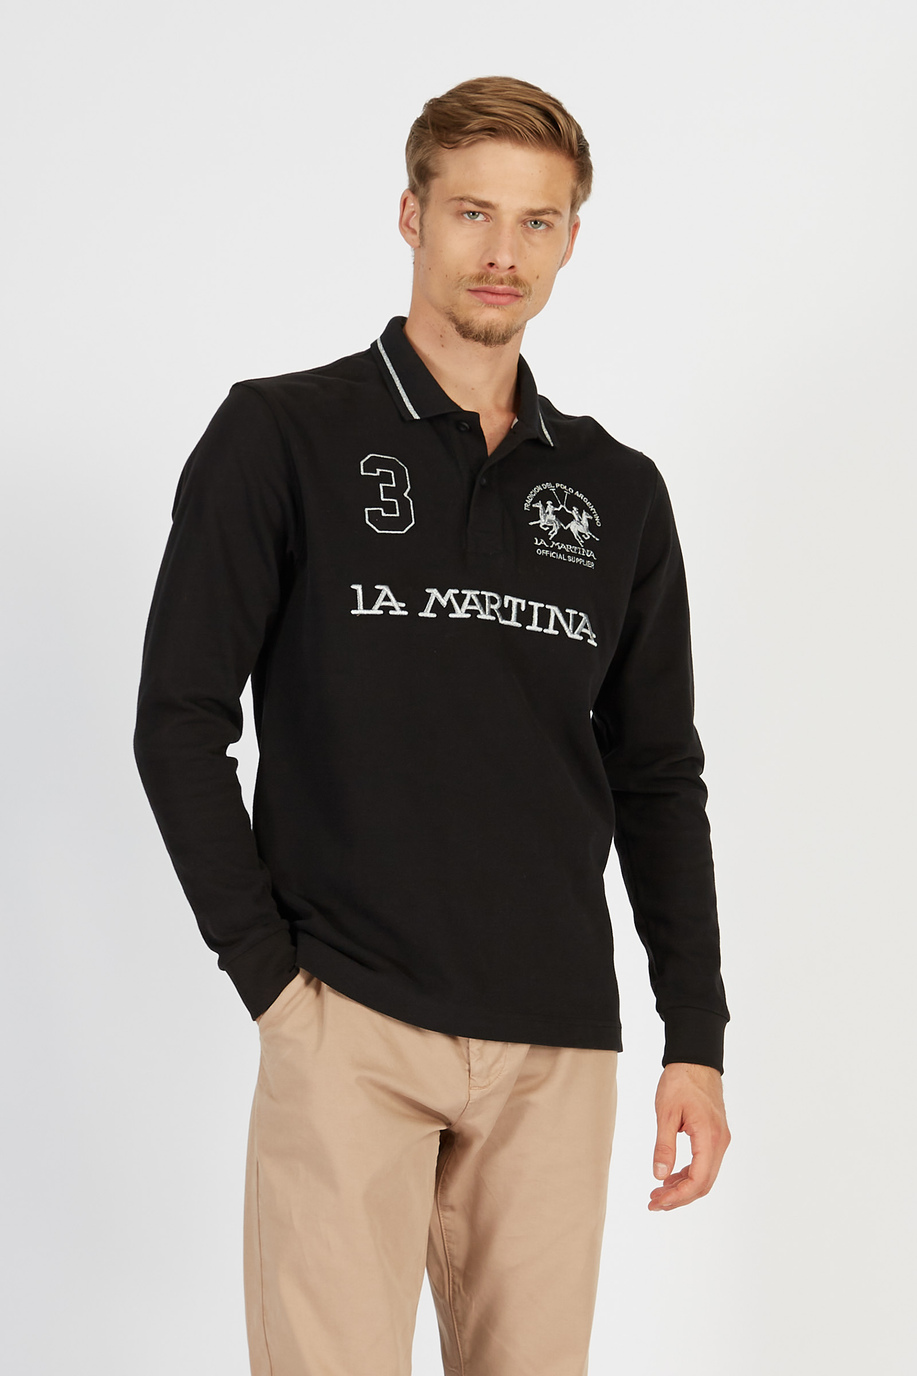 Herren-Poloshirt aus Baumwolle mit langen Ärmeln - Best Seller | La Martina - Official Online Shop